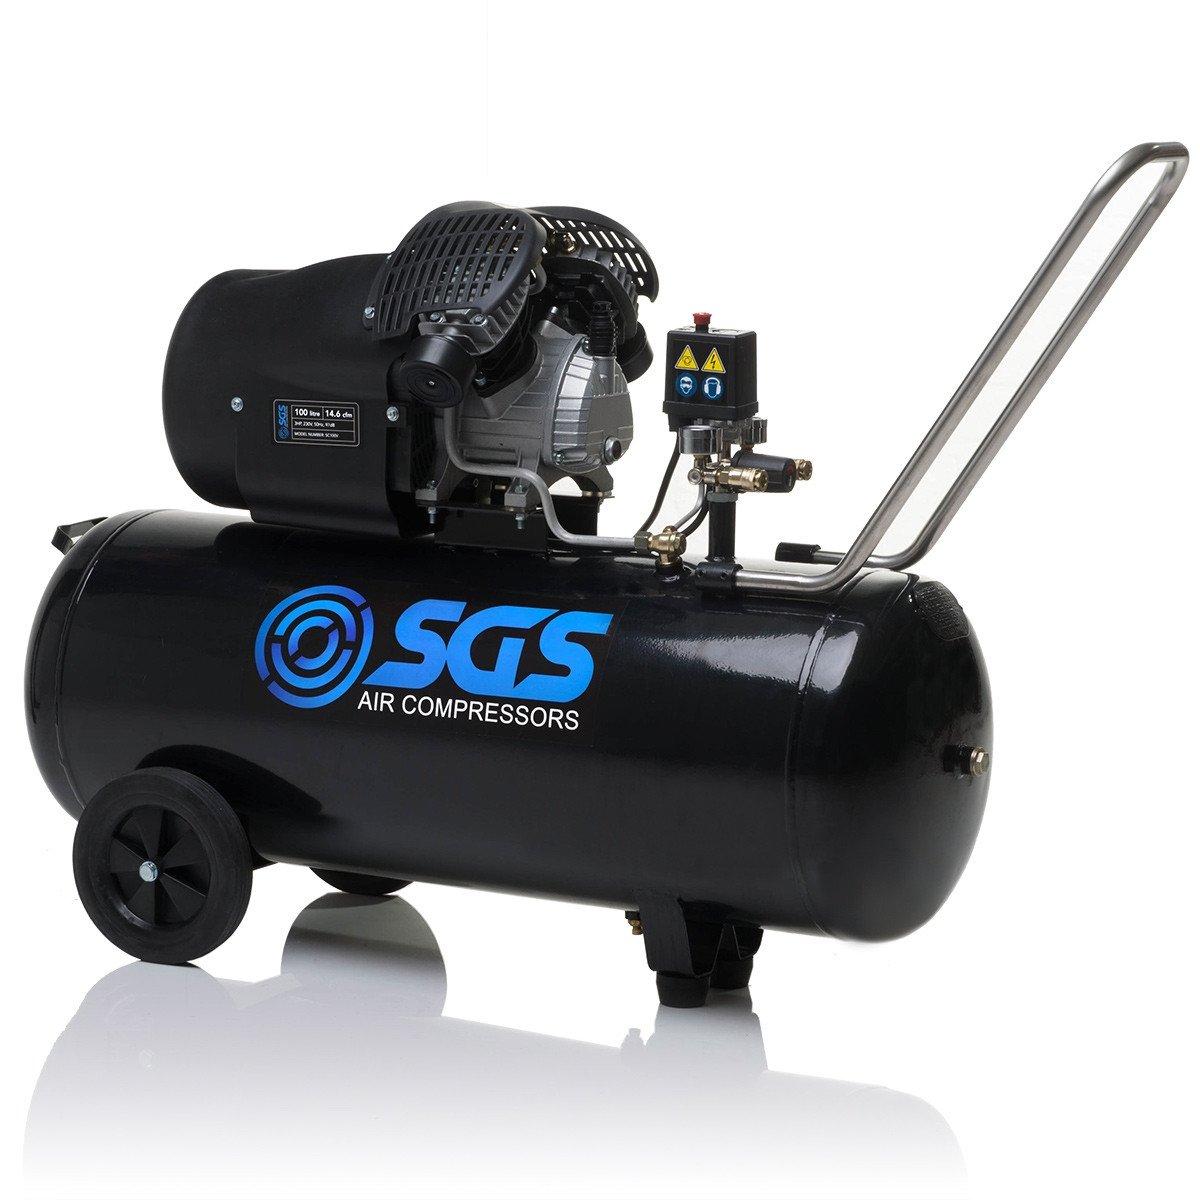 SGS 100升直接驱动空气压缩机-14.6CFM 3.0HP 100L